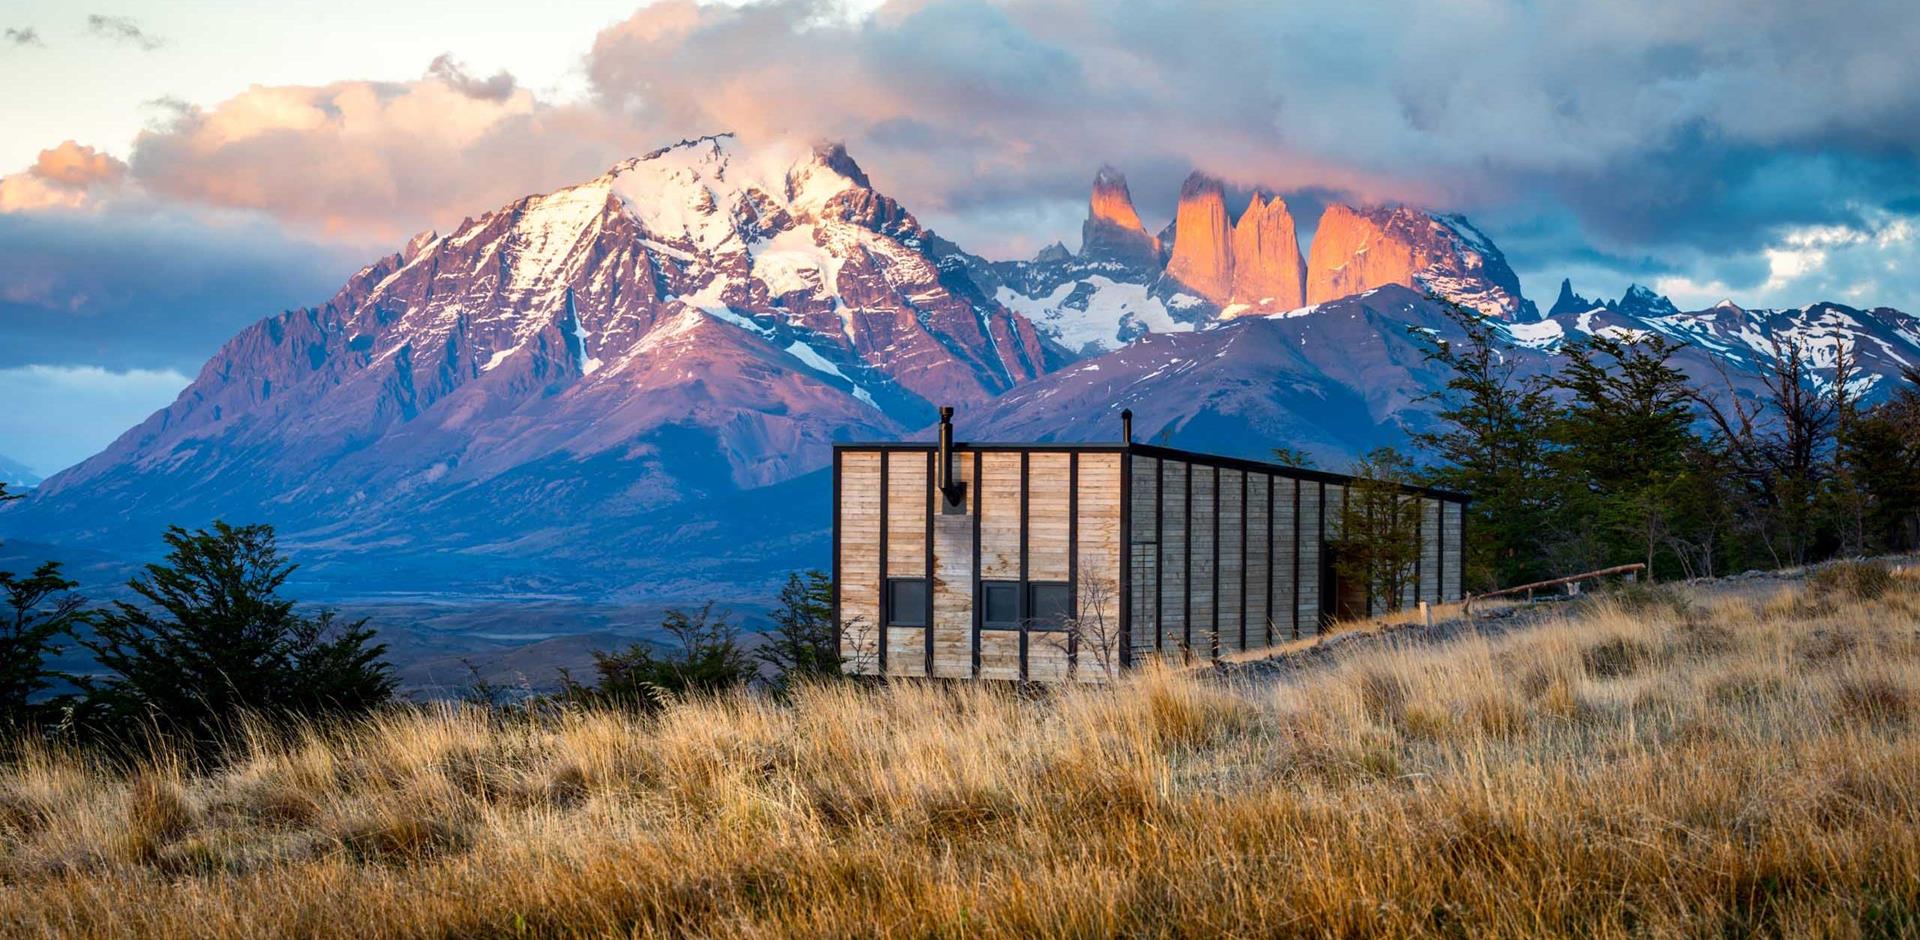 Awasi Patagonia, Chile, South America